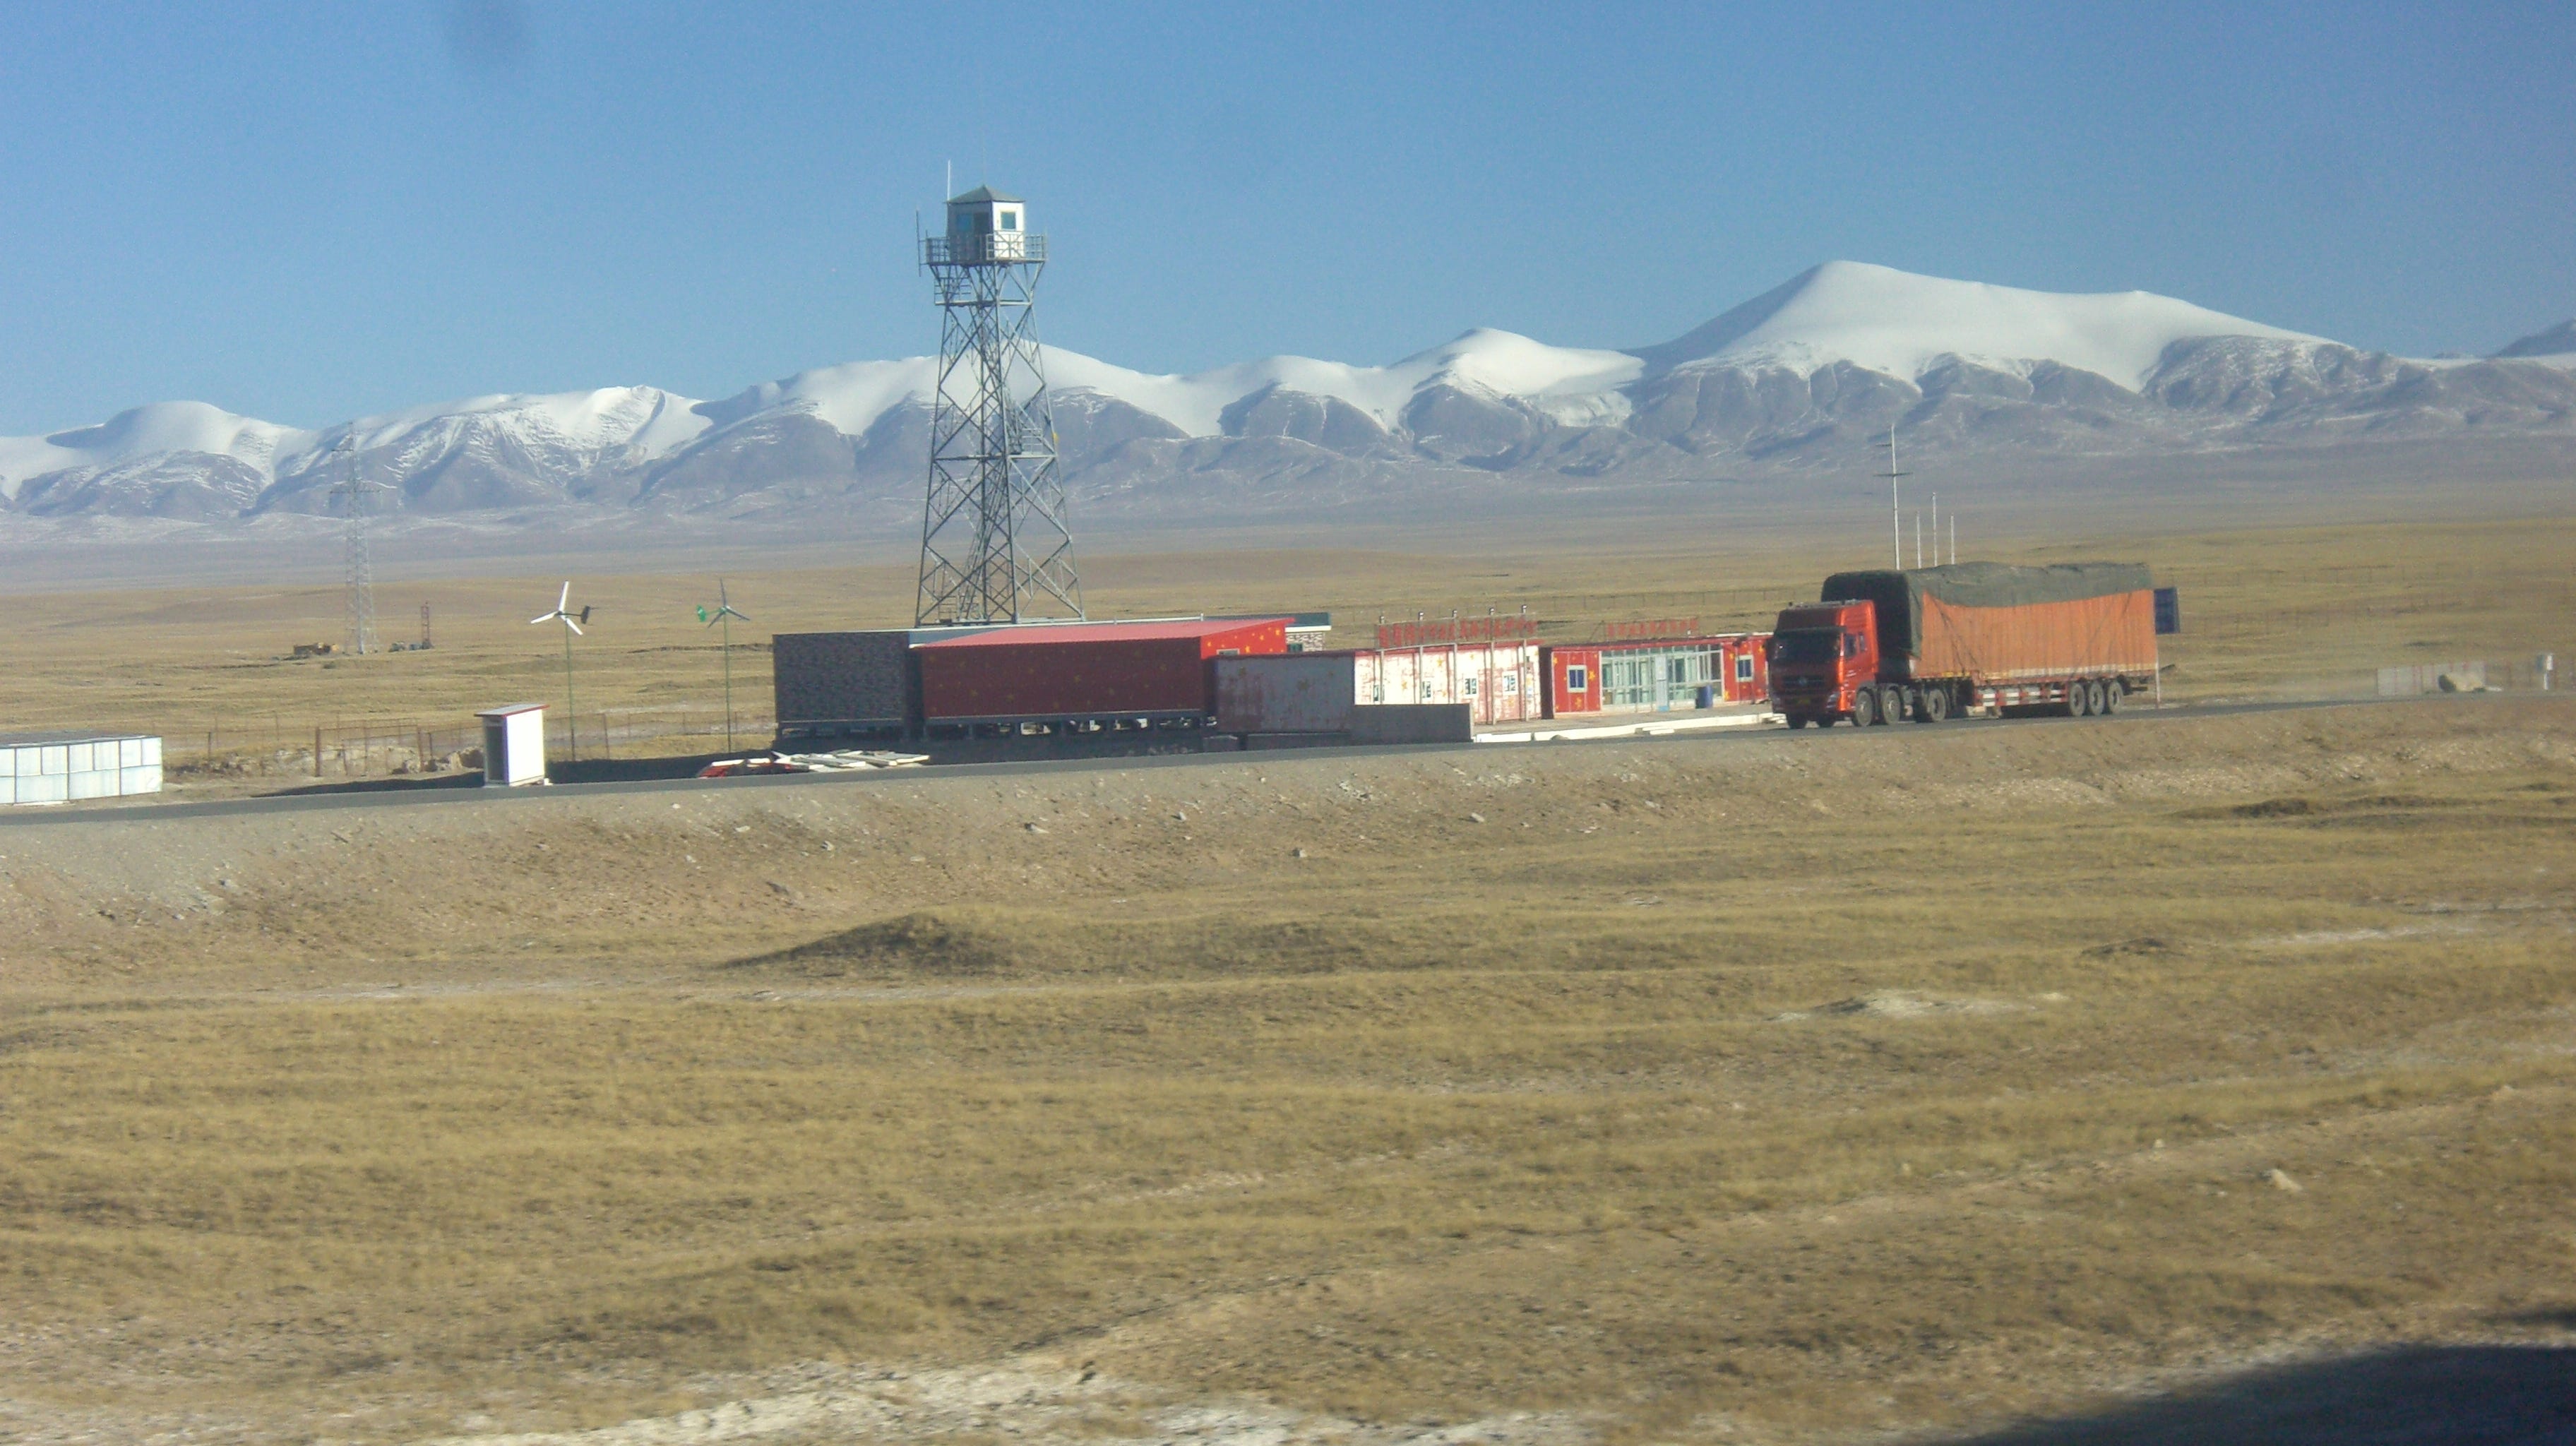 Xining to Lhasa on the Qinghai-Tibet Railway